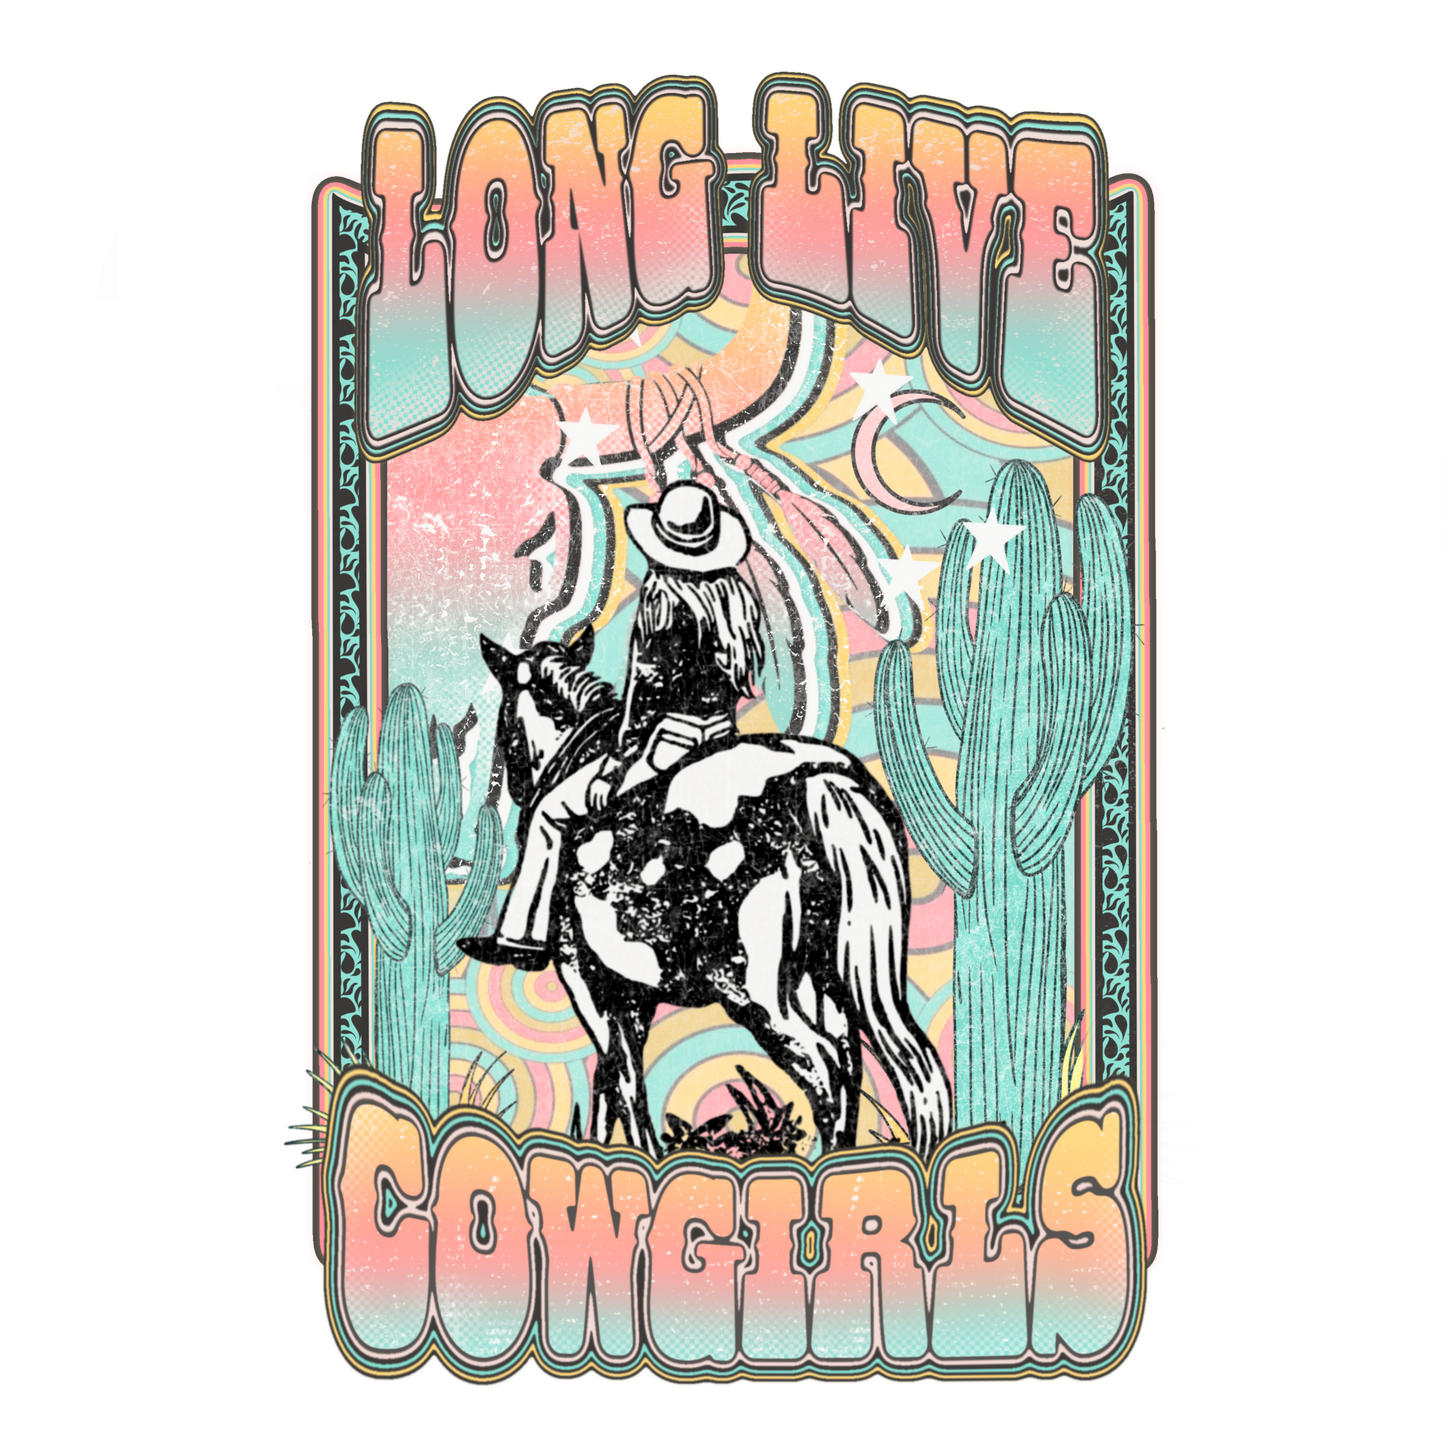 Long live Cowgirls.